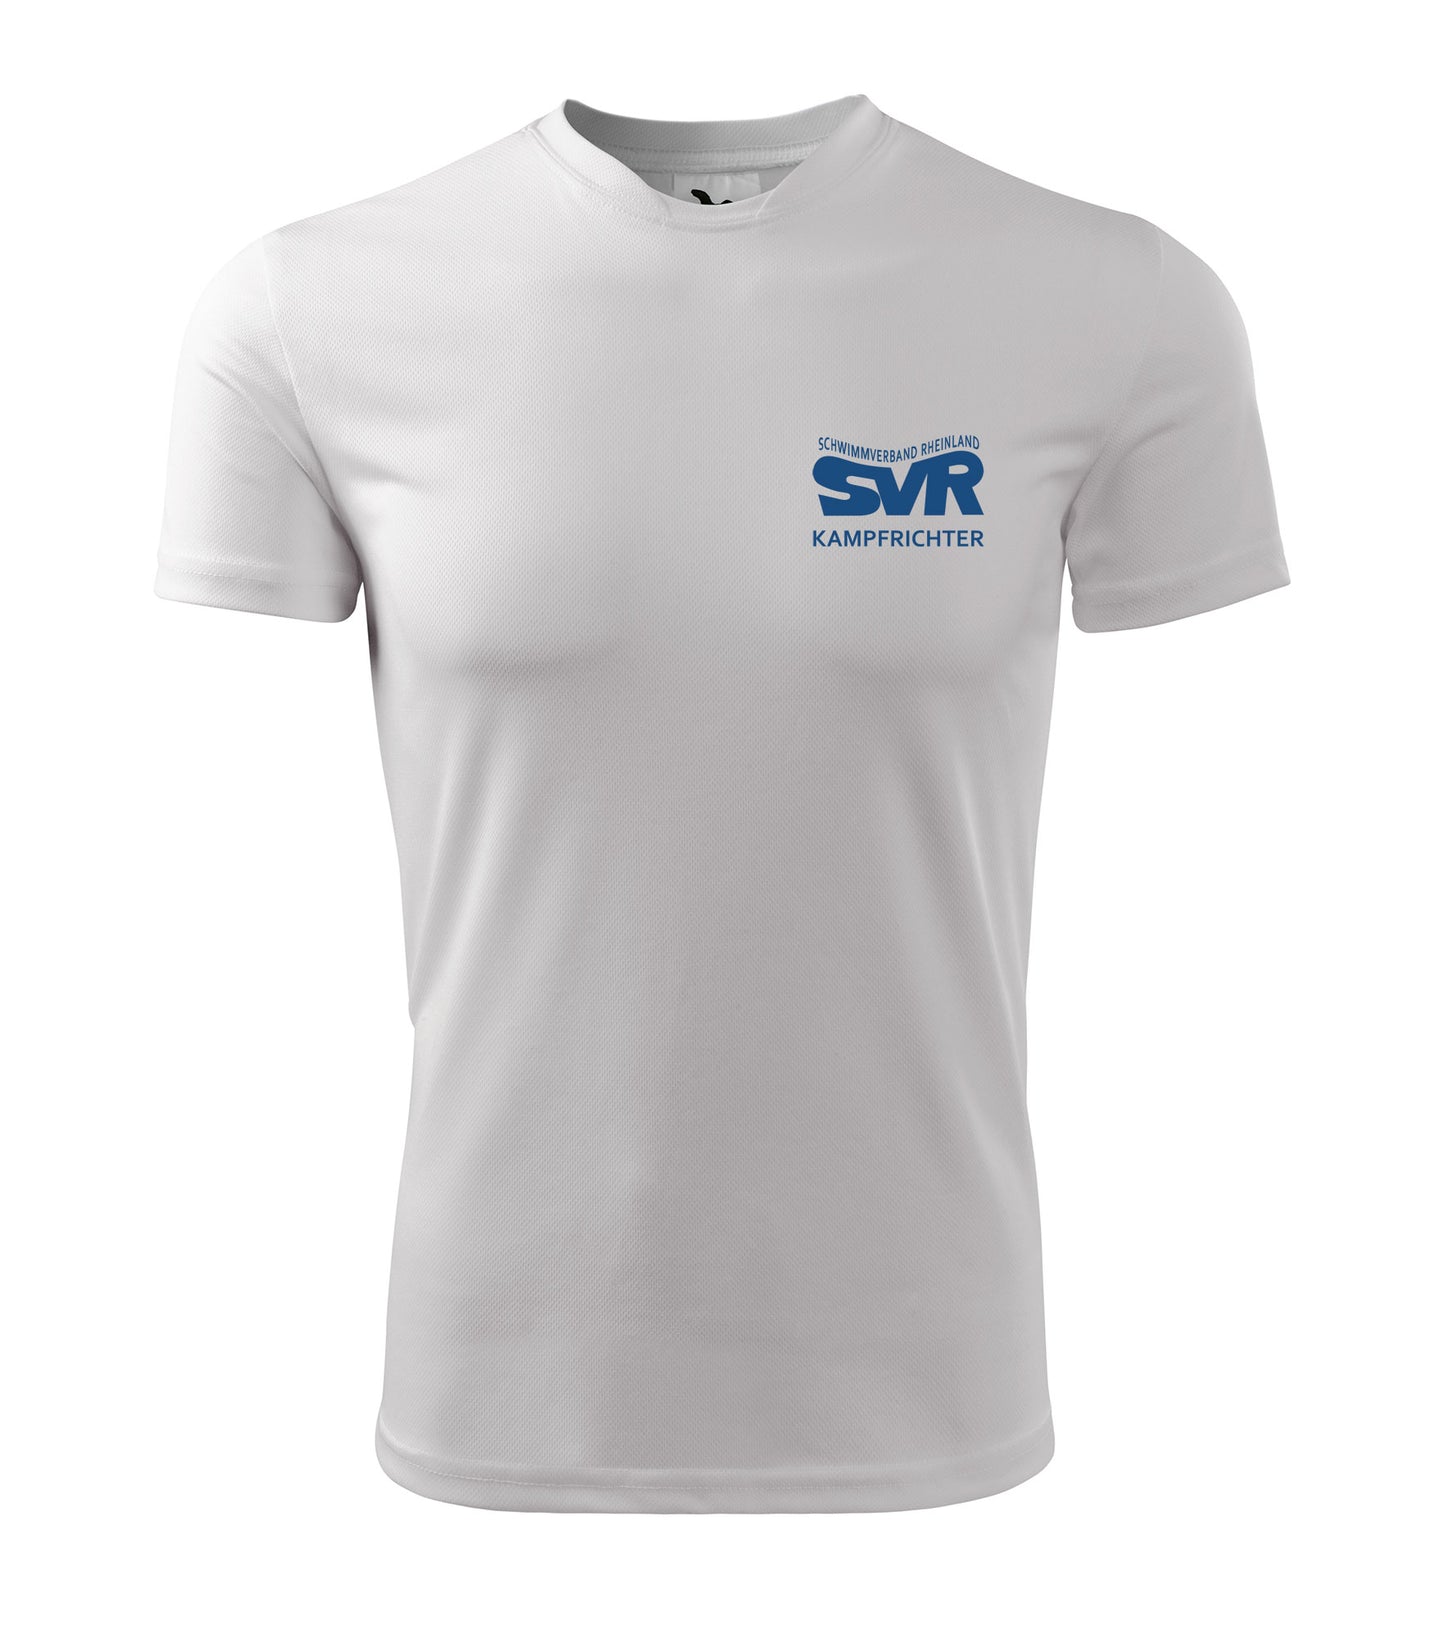 Kampfrichter Multifunktionsshirt - SVR